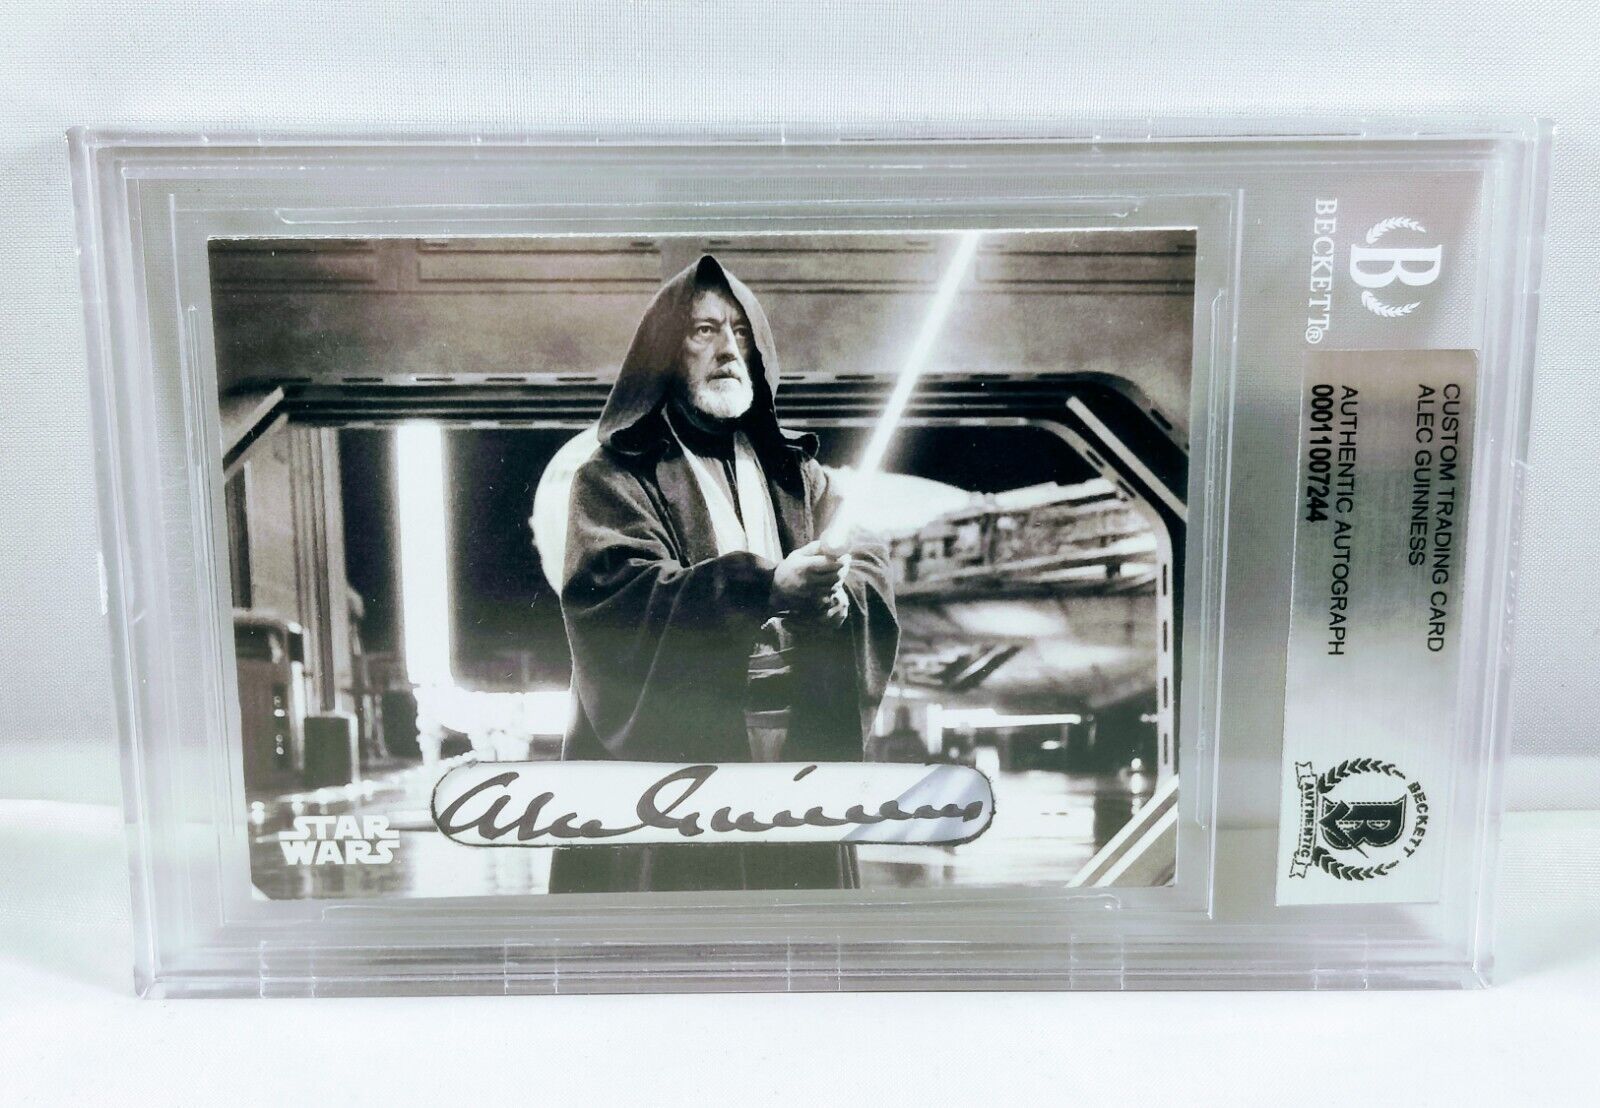 Star Wars Obi Wan Kenobi Alec Guiness Autographed Cut Card